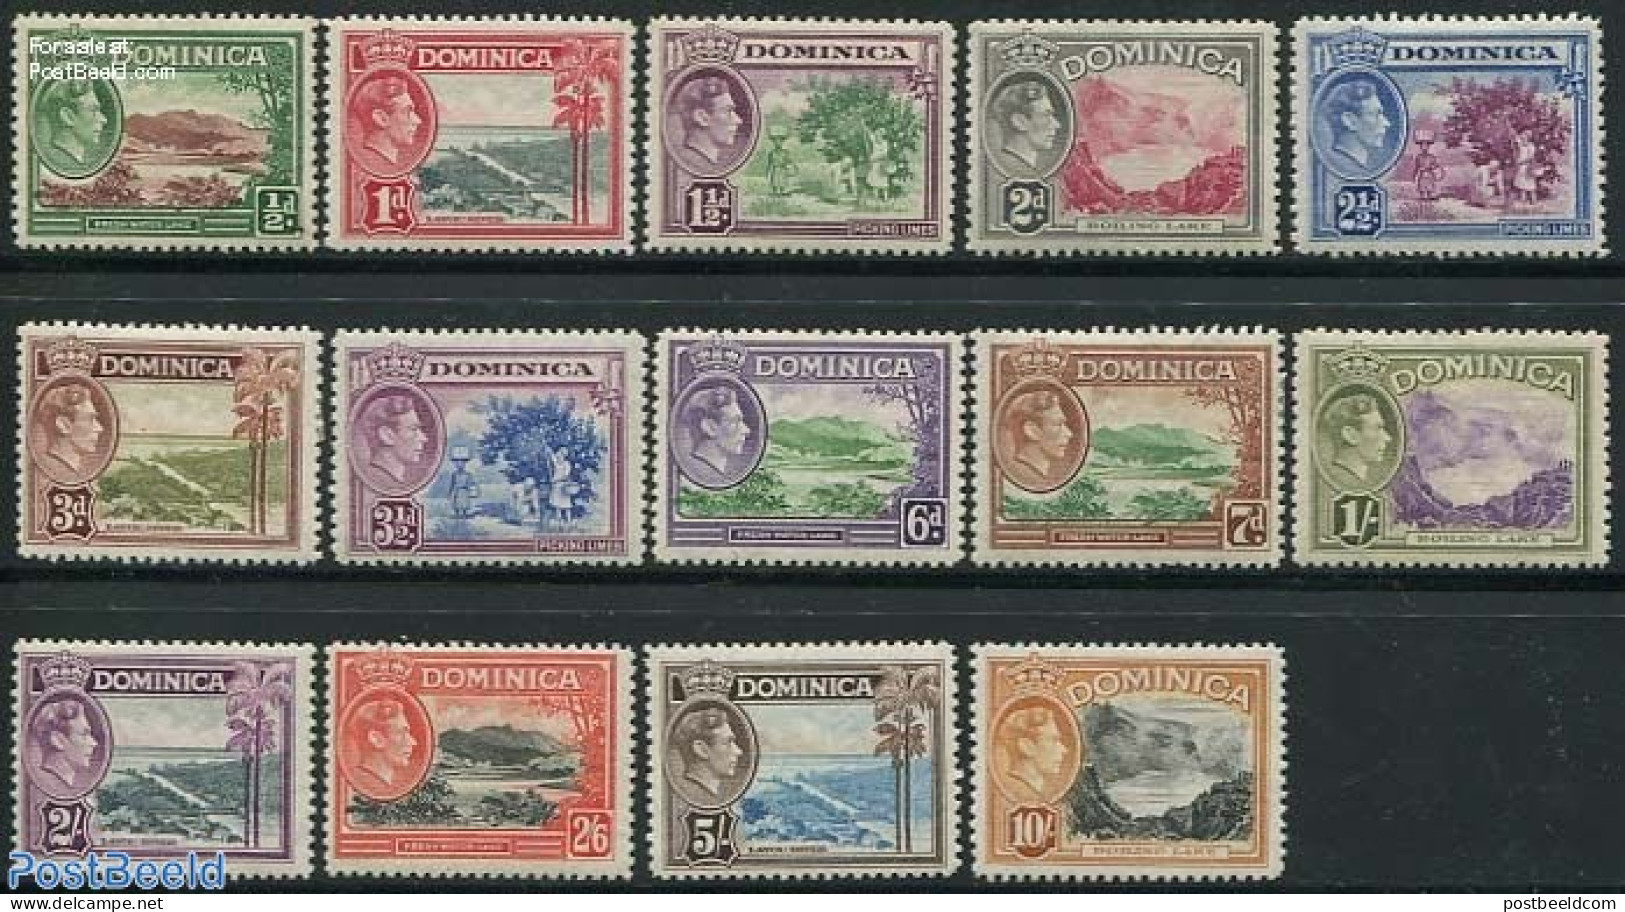 Dominica 1938 Definitives 14v, Unused (hinged) - Dominicaine (République)